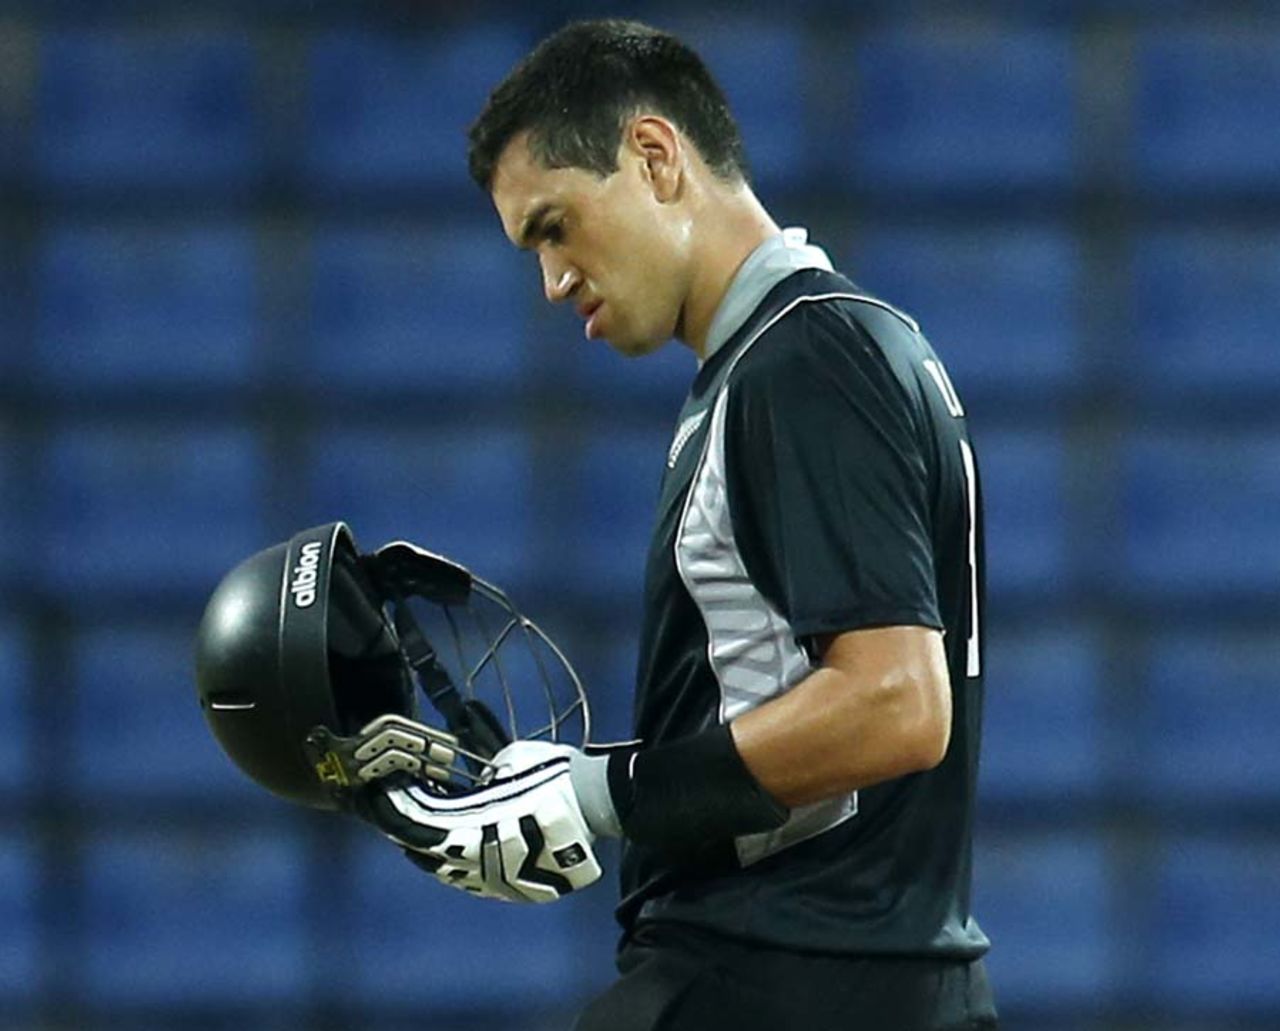 Ross Taylor checks his helmet after being hit by Lasith Malinga, Sri Lanka v New Zealand, 2nd ODI, Pallekele, November 4, 2012